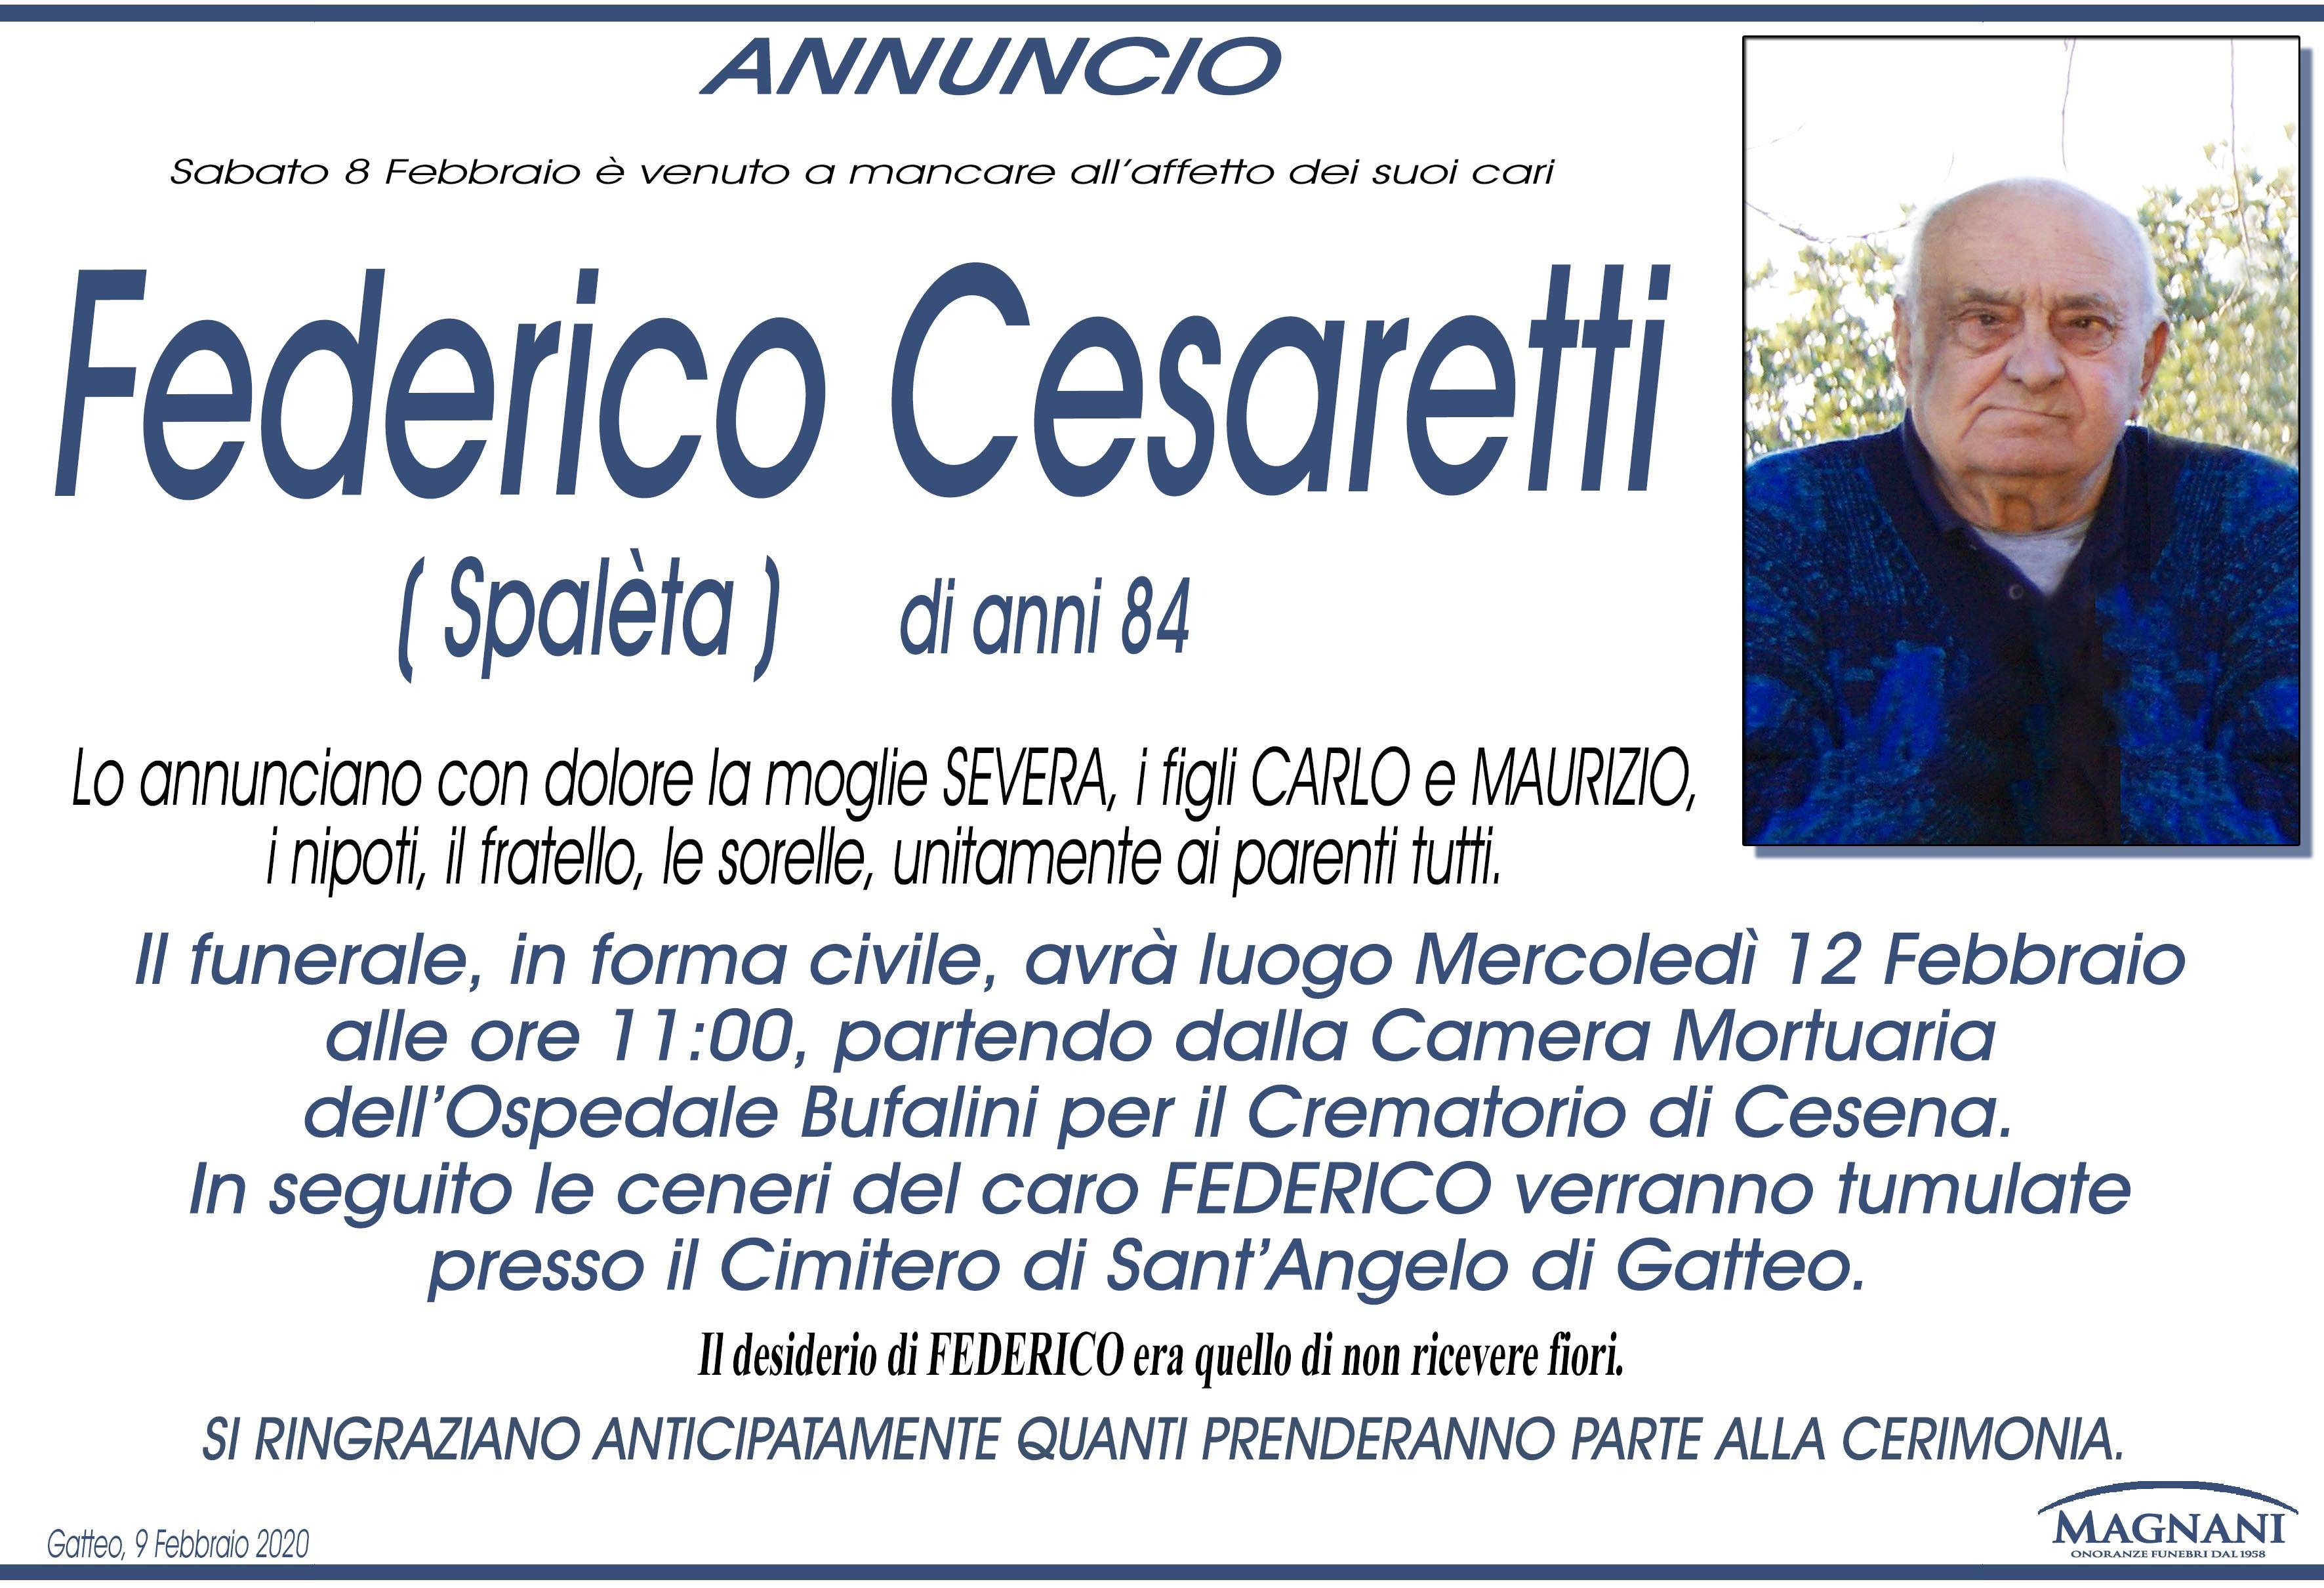 Federico Cesaretti